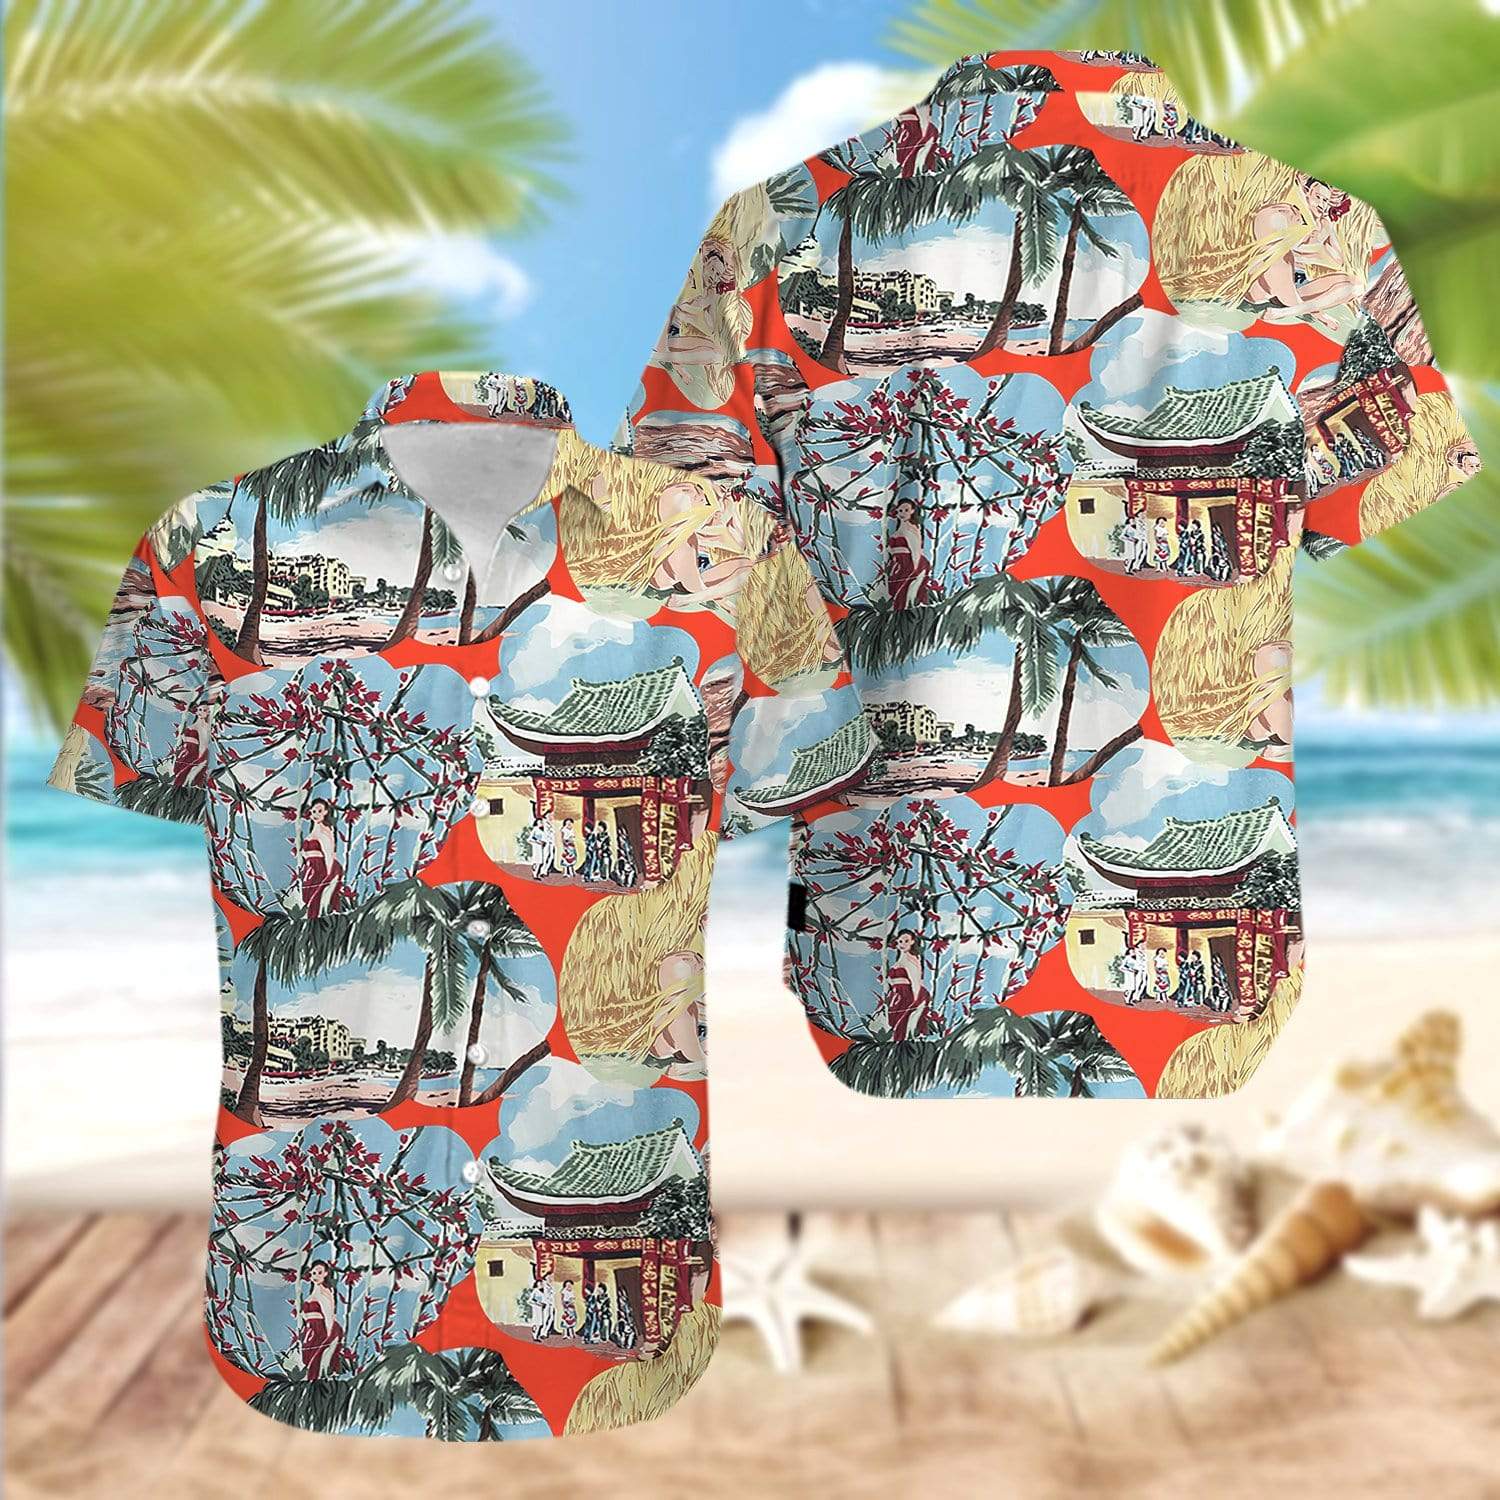 kurobase-ace-ventura-vibe-jim-carreys-hawaiian-aloha-shirts-kv.jpg